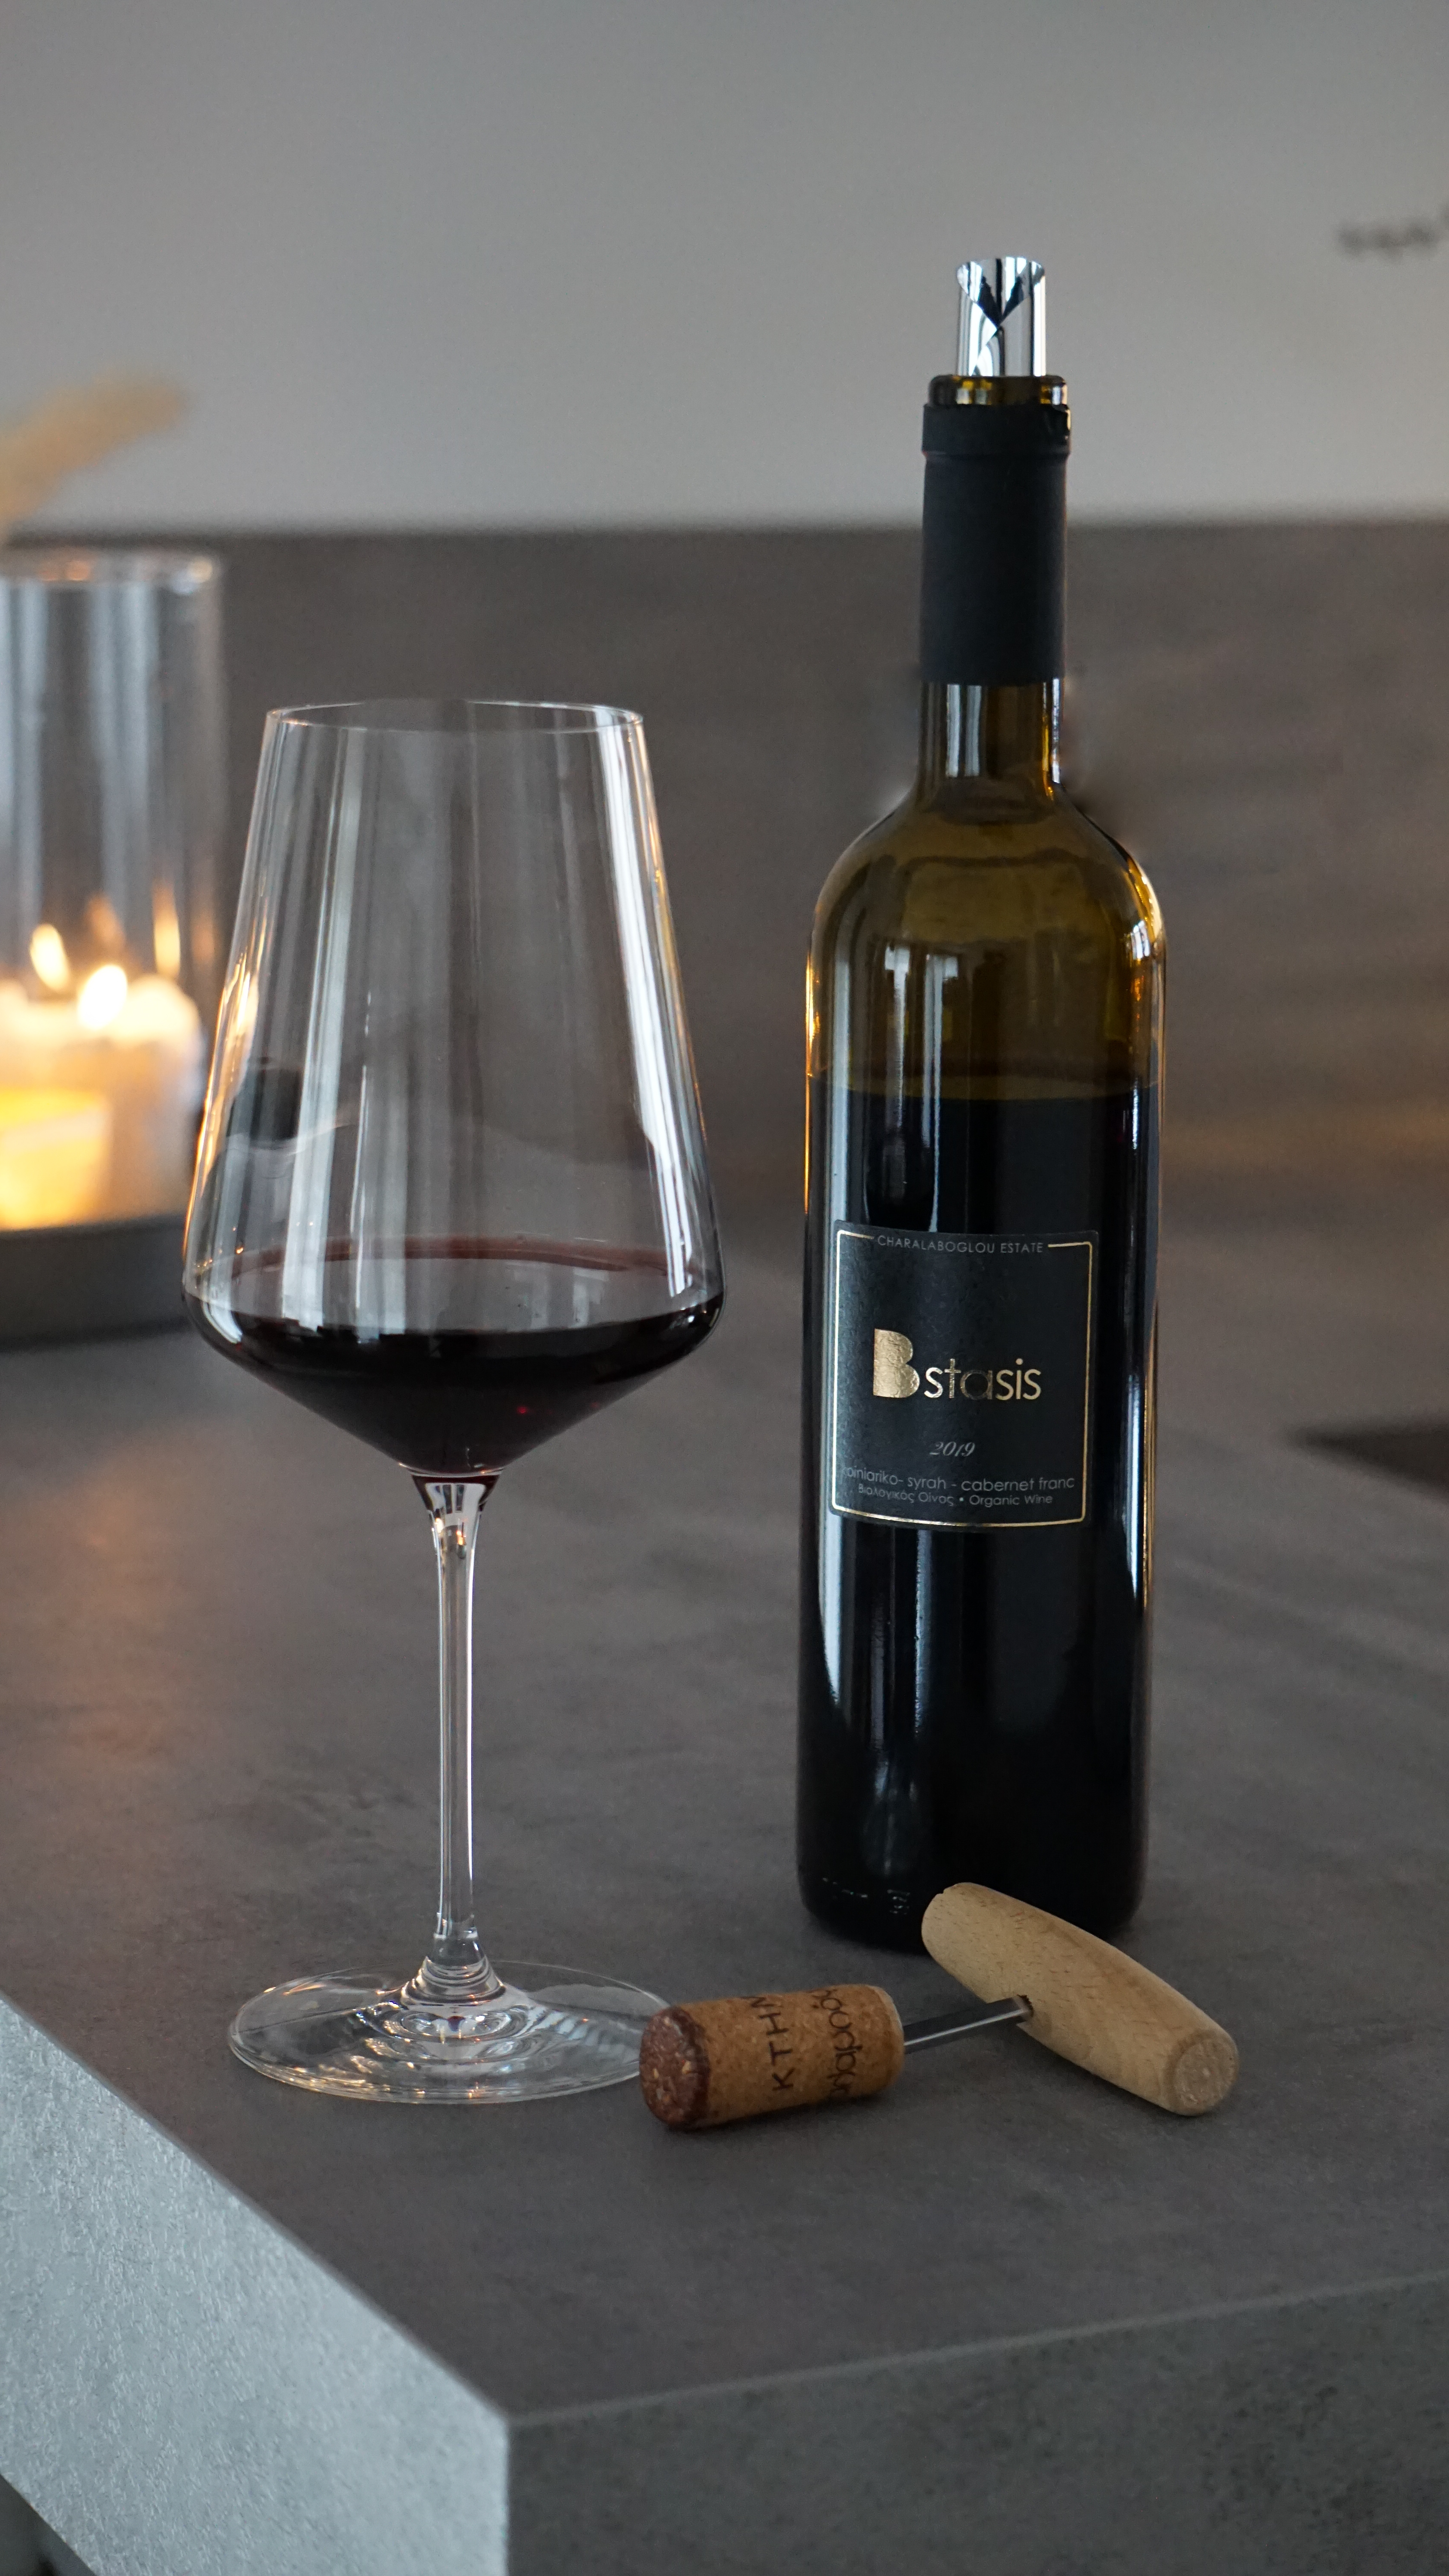 Bstasis Rot BIO 2019 - Charalaboglou Wines